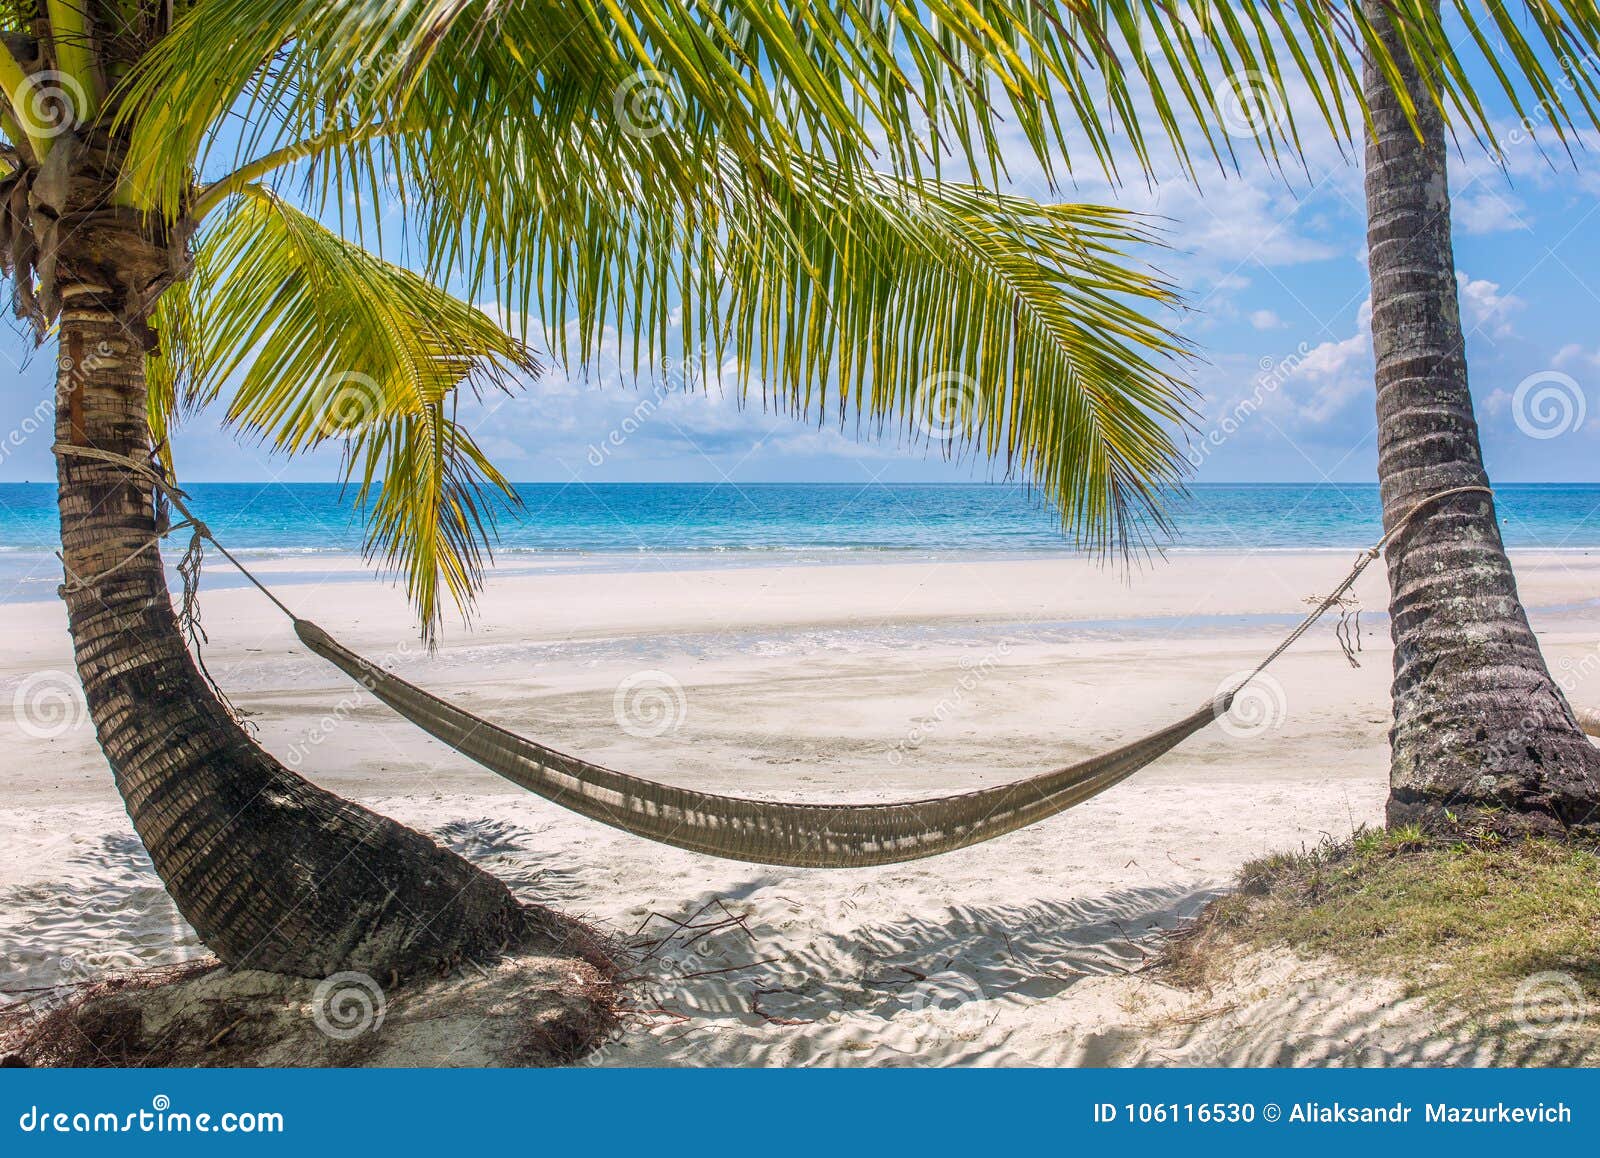 empty-hammock-palm-trees-tropical-beach-empty-hammock-palm-trees-tropical-beach-thailand-106116530.jpg